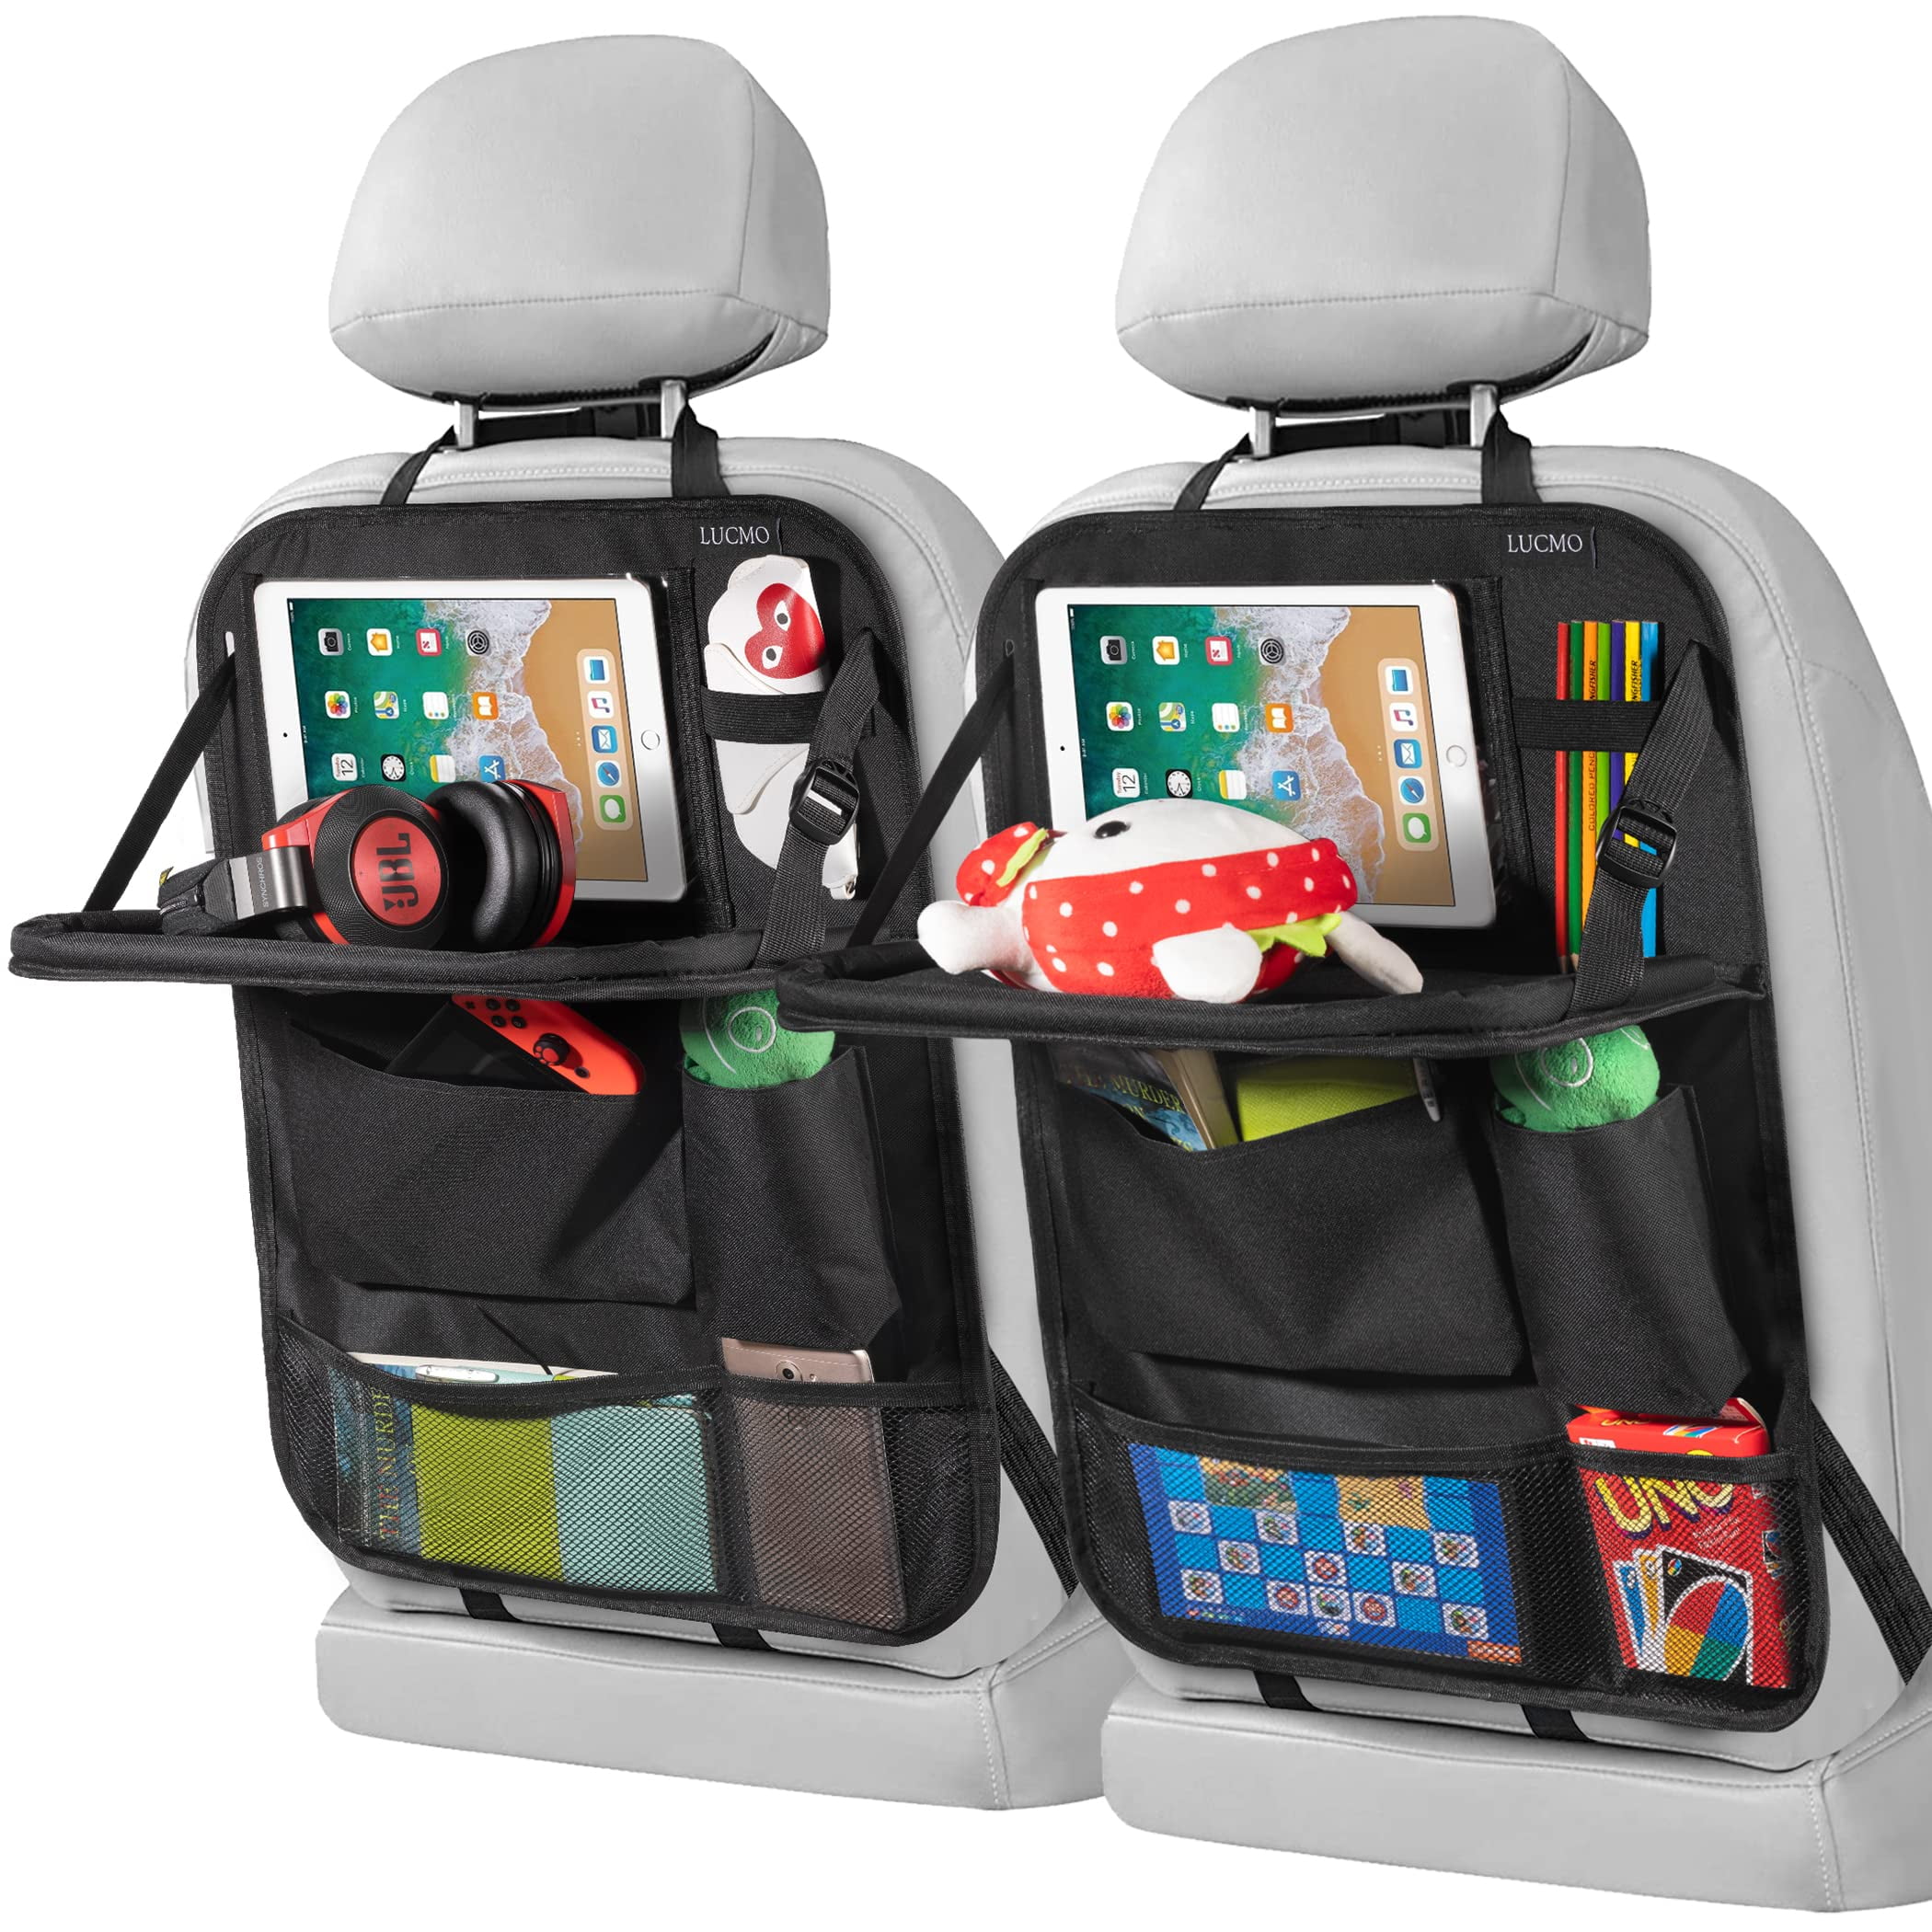 Evago Heavy Duty Car Back Seat Car Organizer Sag Proof & Reinforced Corners  Protects Ipad & Backseat Car Seat Organizer Storage Compartment